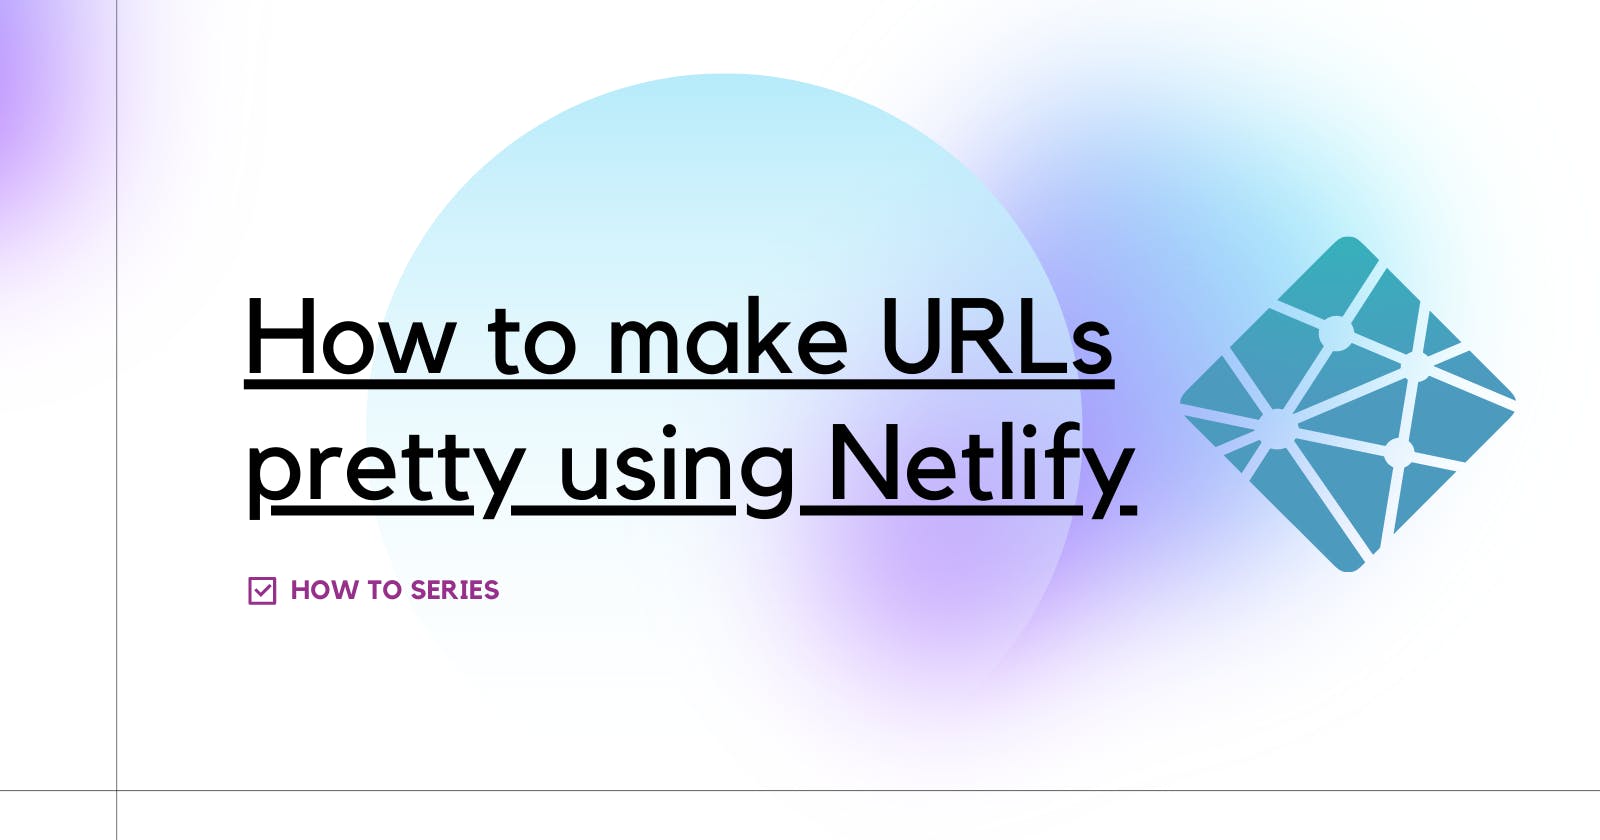 How to make URLs pretty using Netlify